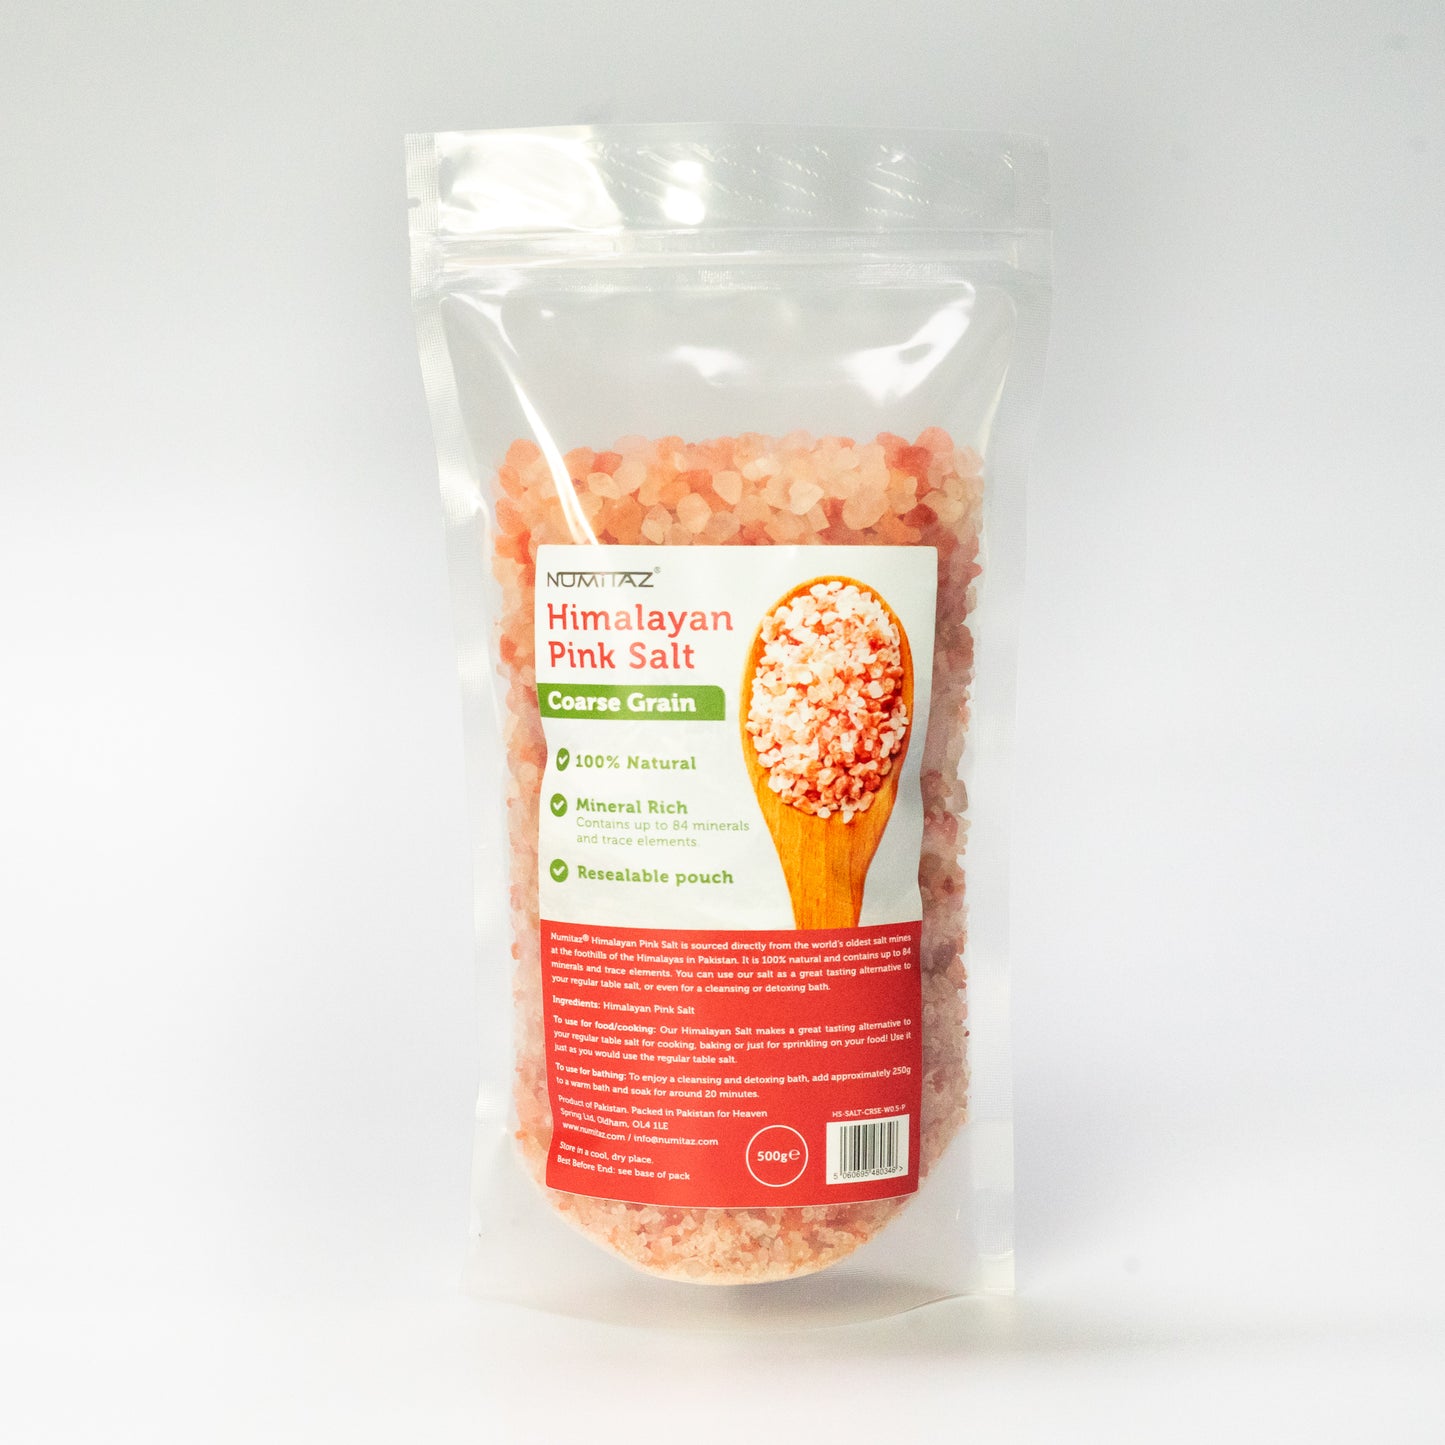 Numitaz Himalayan pink salt coarse 0.5kg - Case of 6